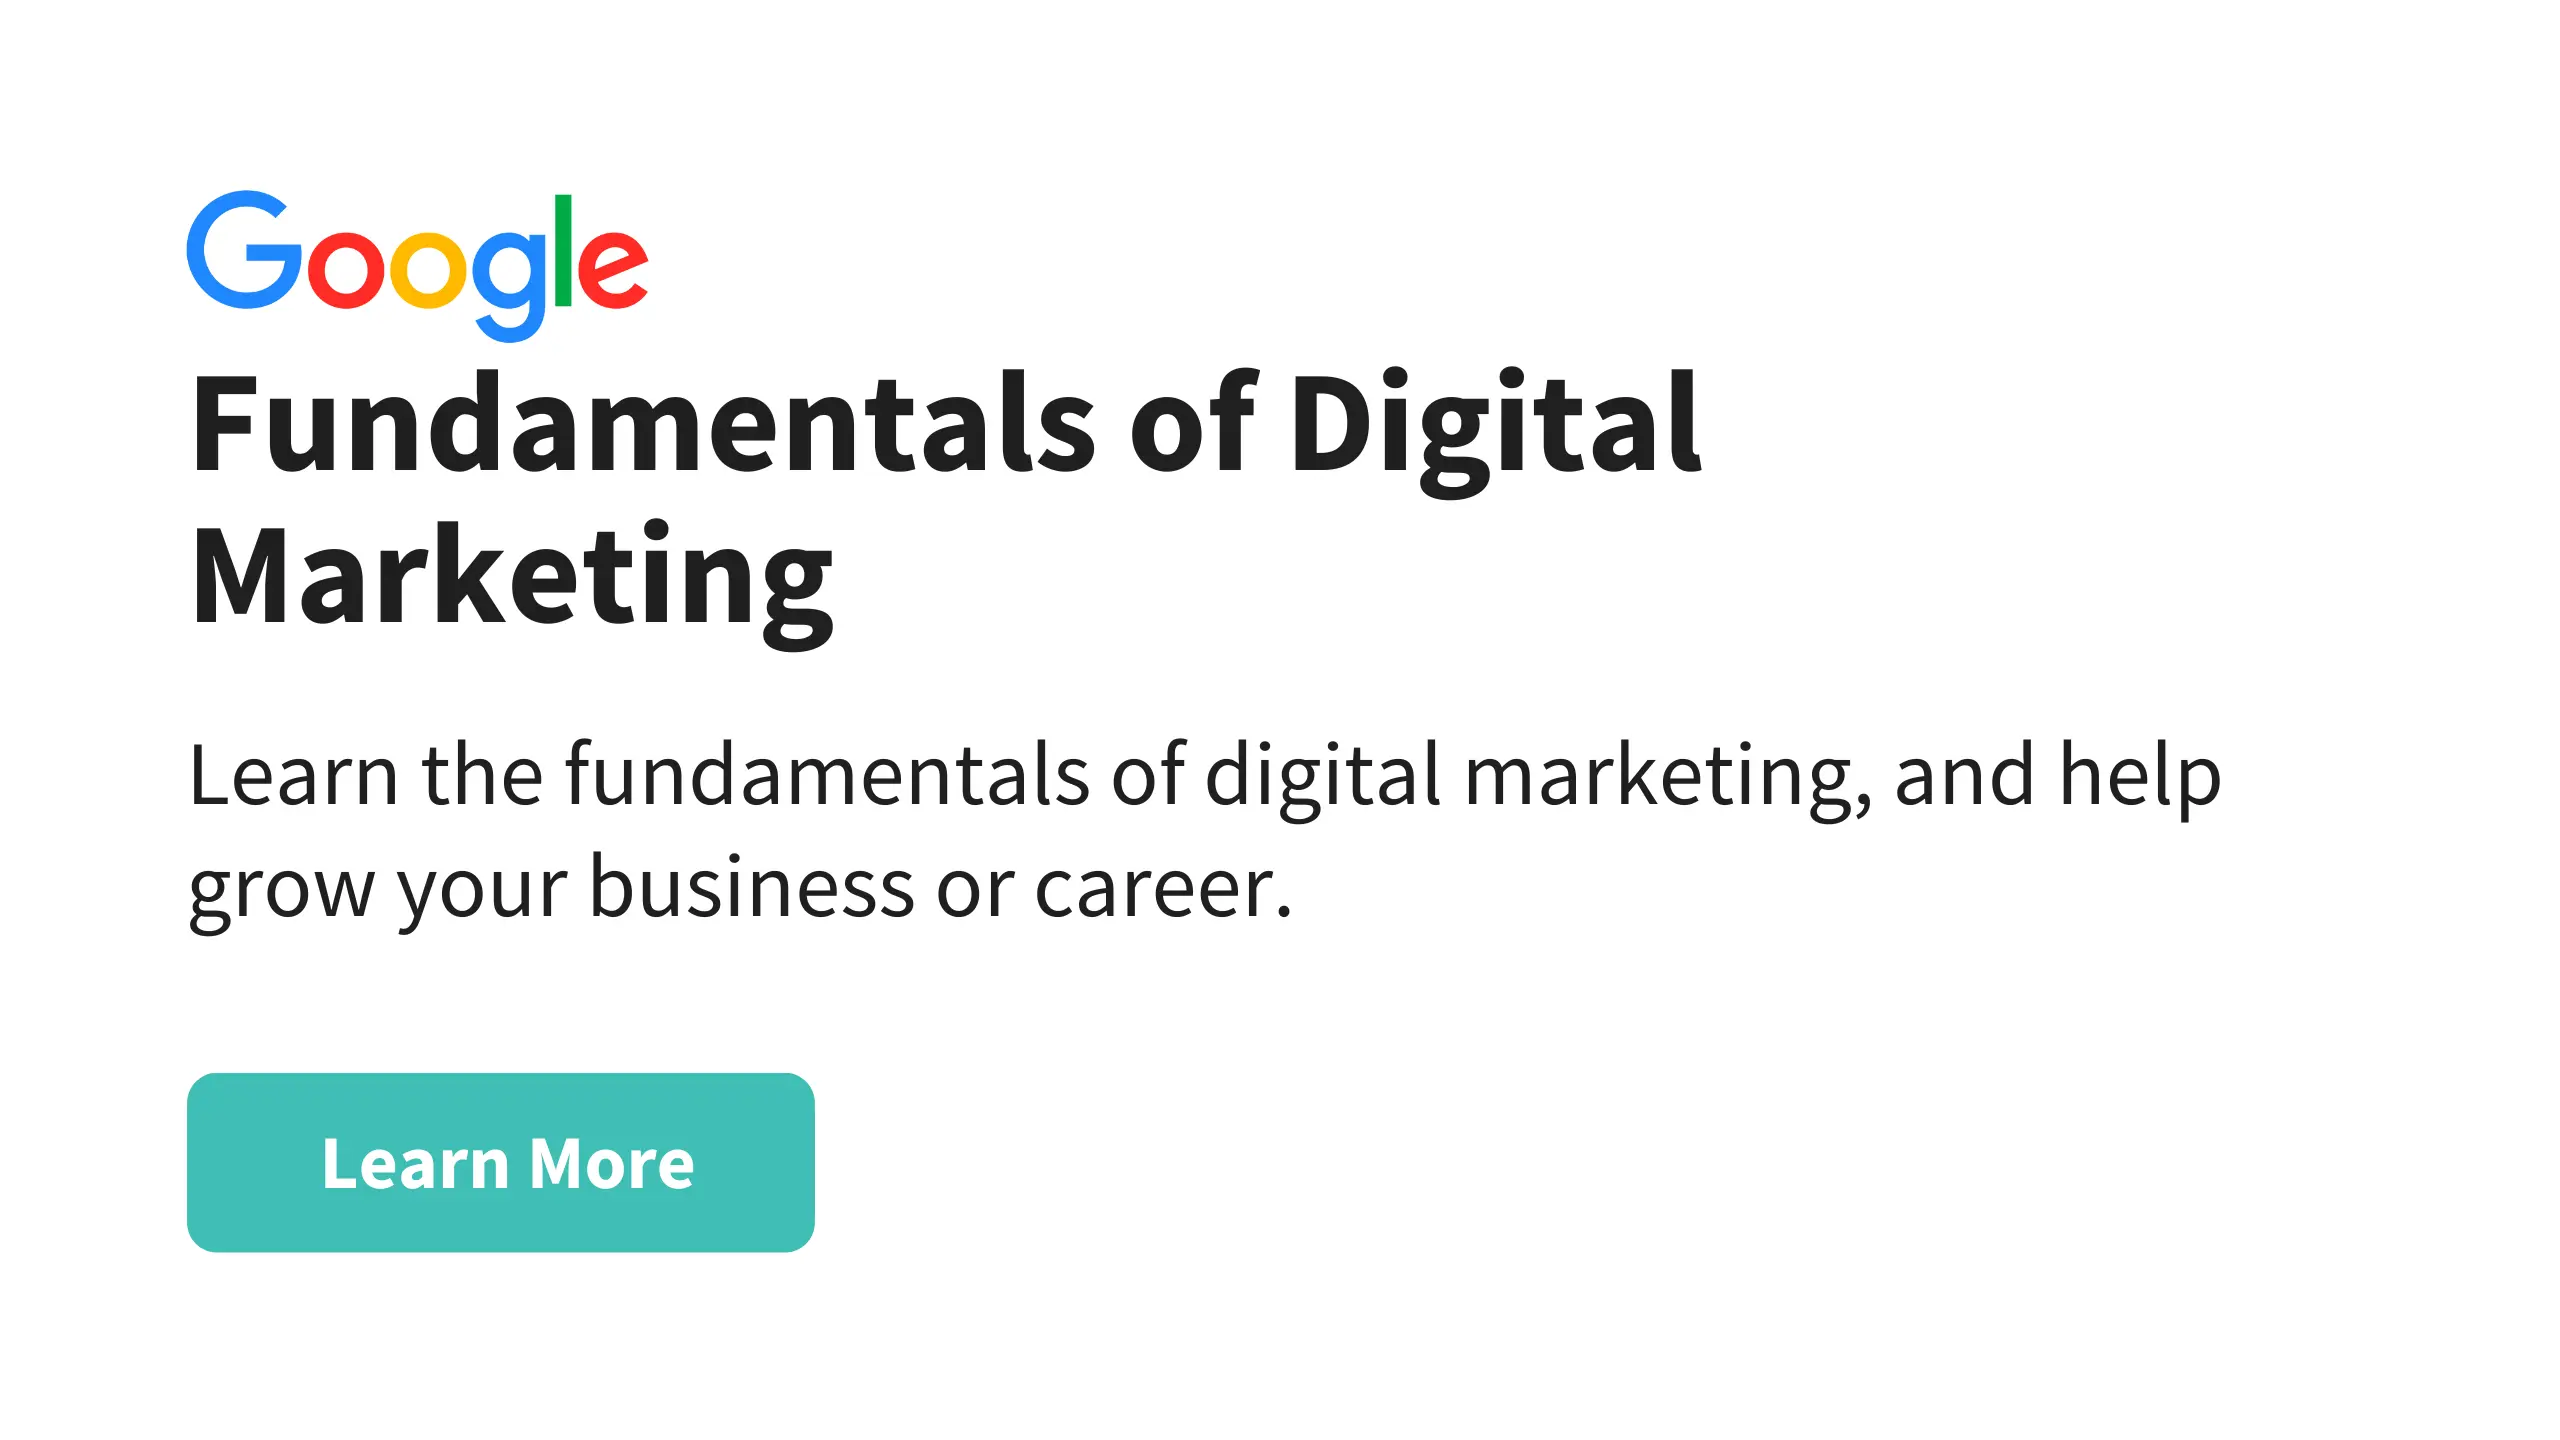 Google - Fundamentals of Digital Marketing Course